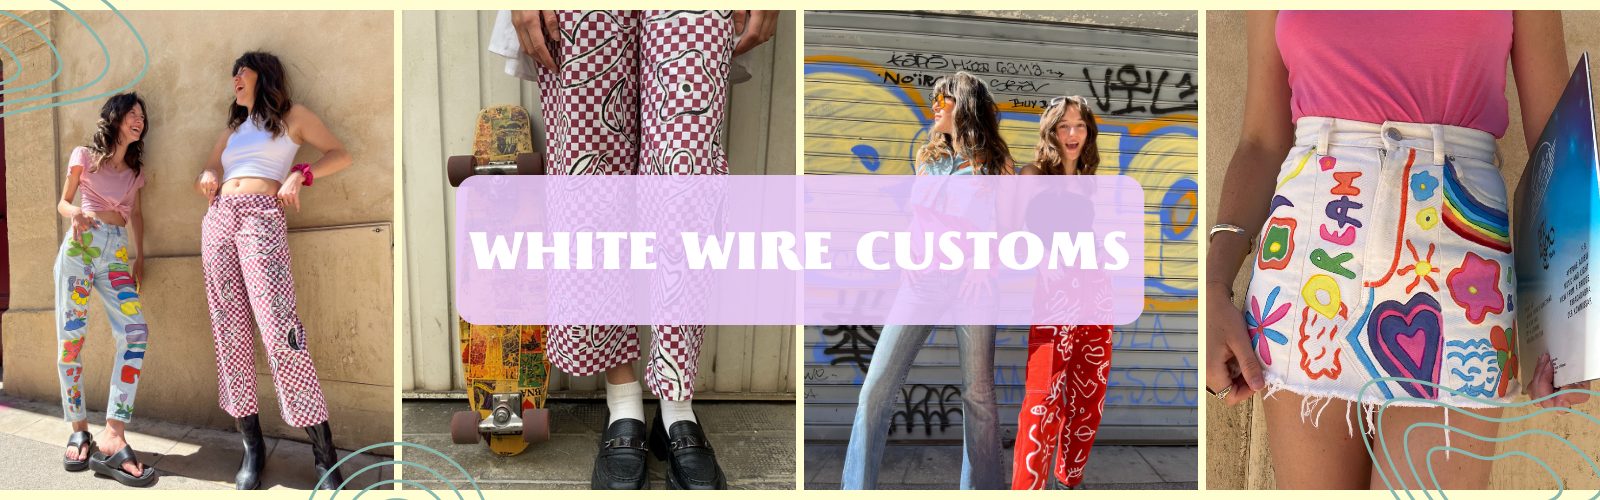 Image de blog white wire customs